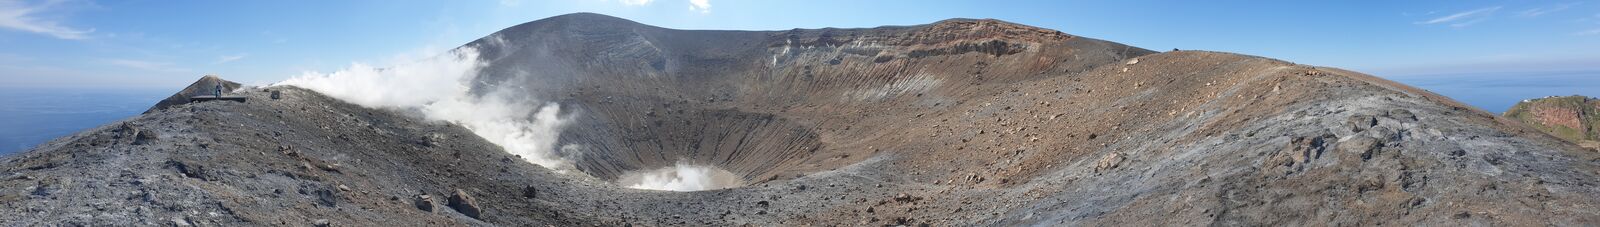 Panorama of the crater of Vulcano